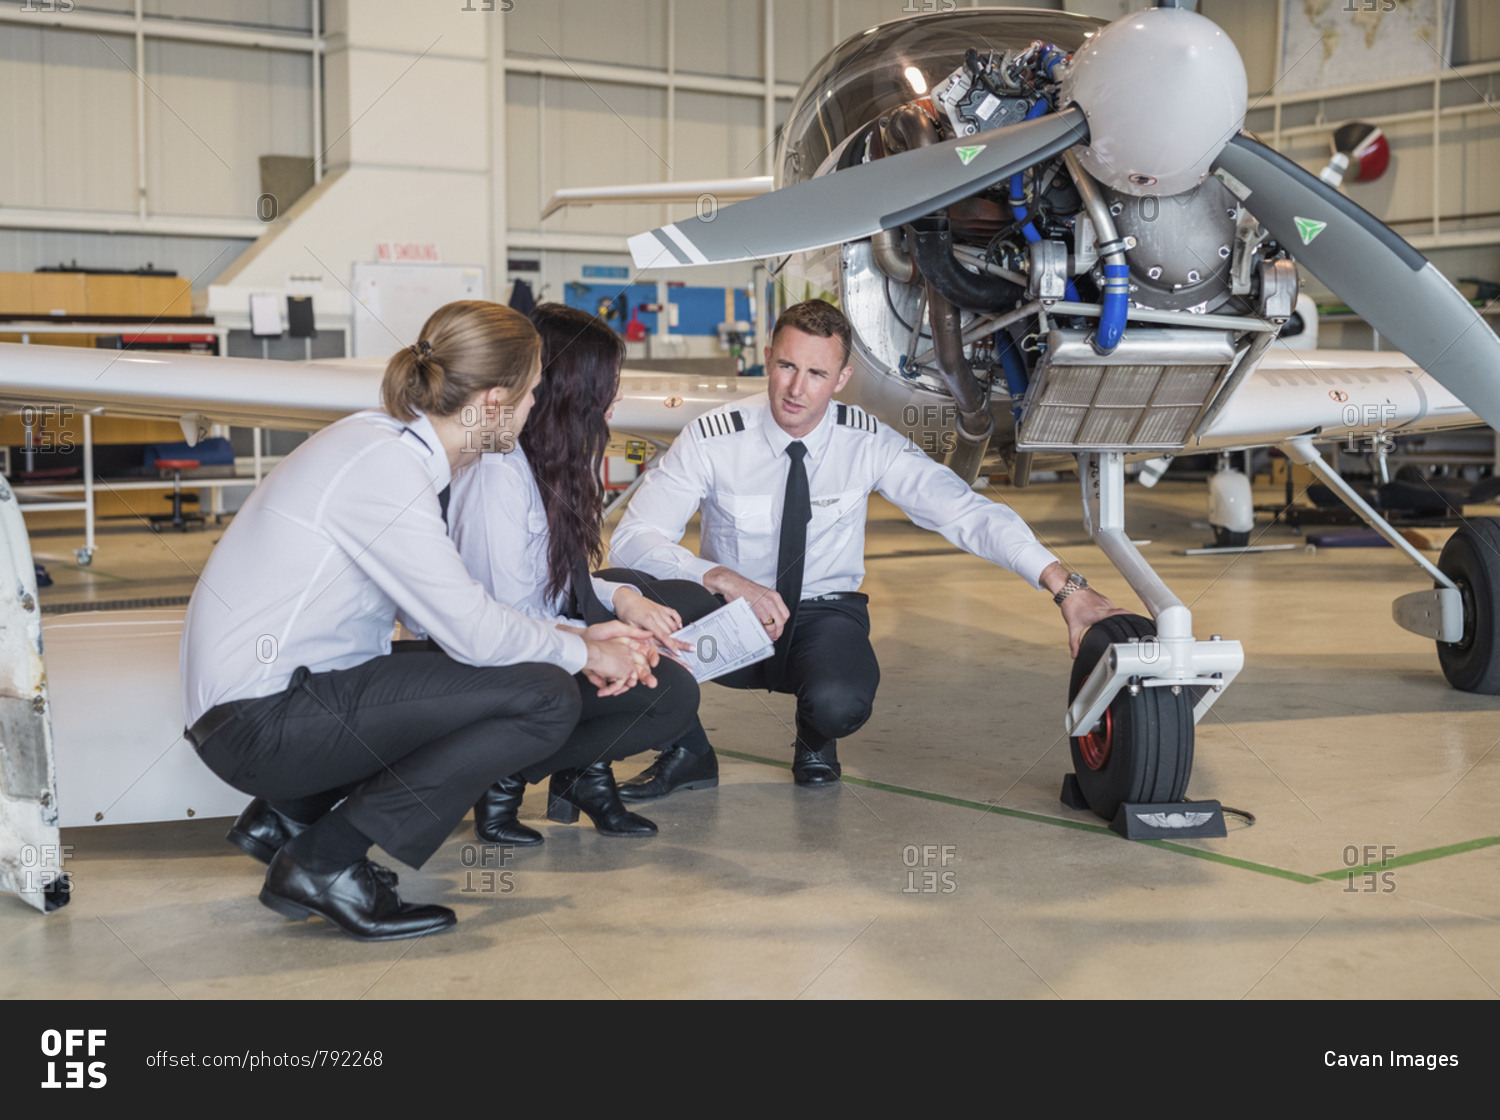 Male engineer showing airplane wheel to trainees while crouching on floor in hangar